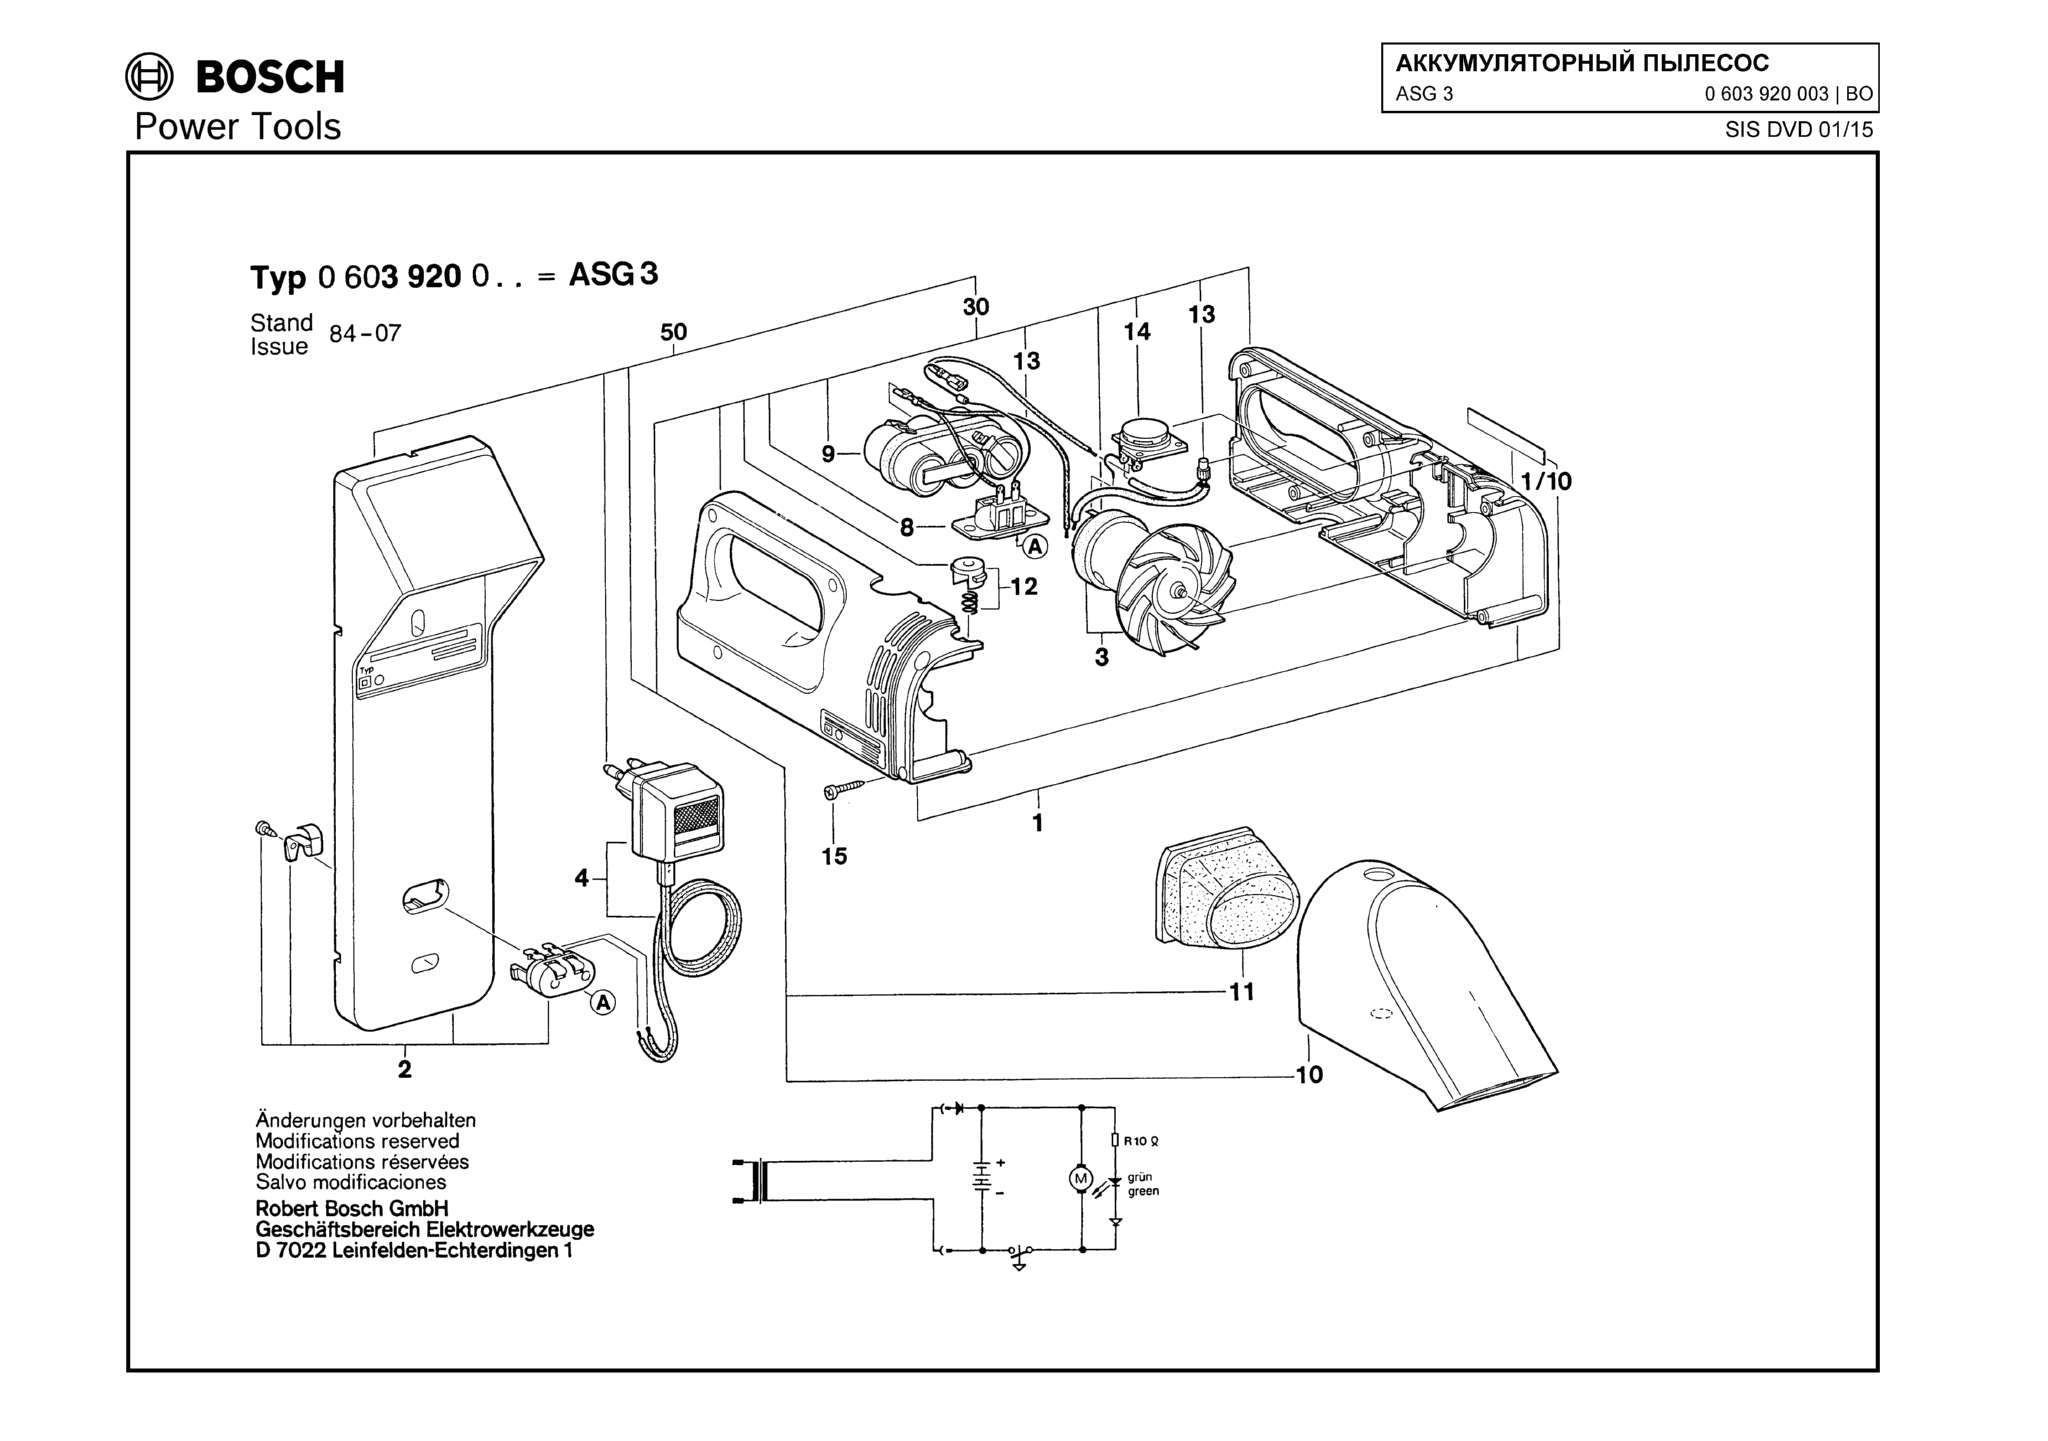 Запчасти, схема и деталировка Bosch ASG 3 (ТИП 0603920003)